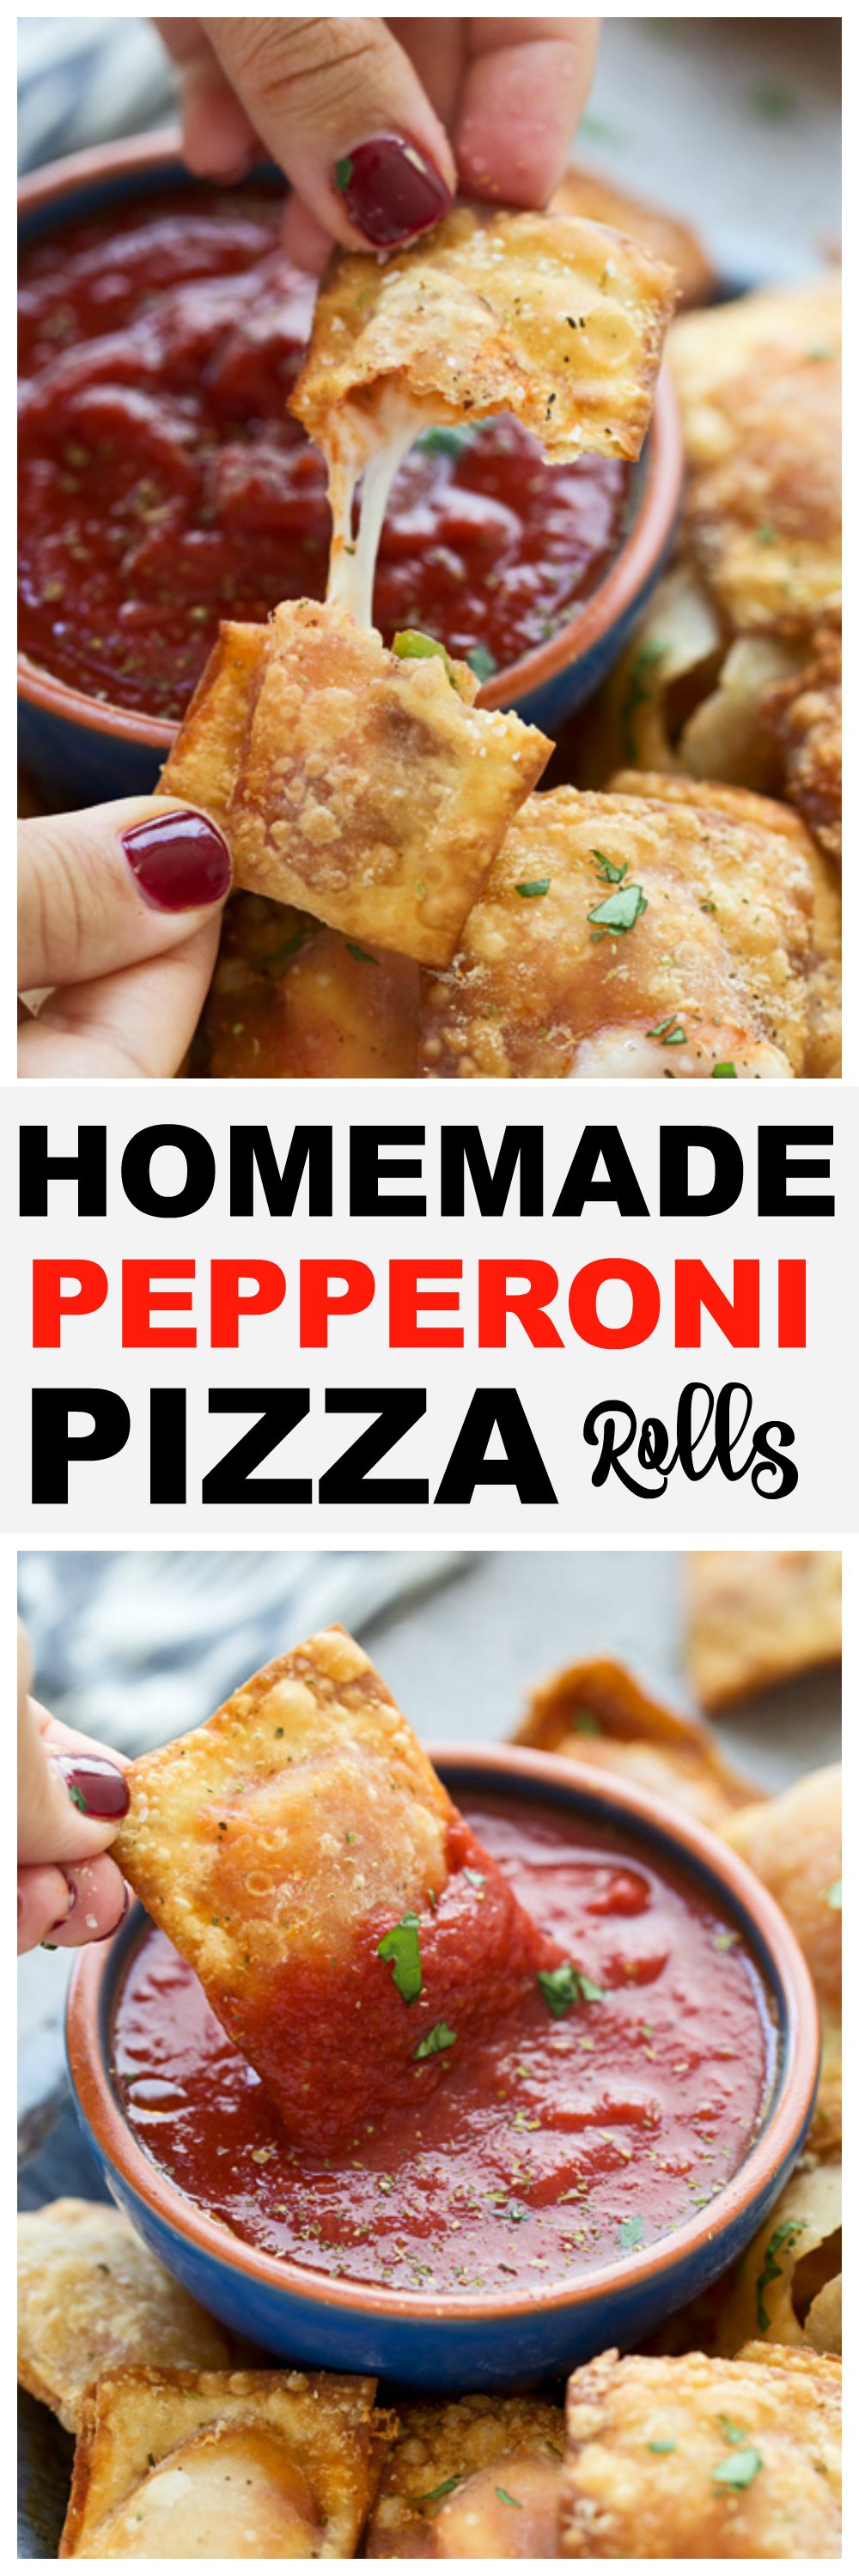 Homemade Pepperoni Pizza Rolls